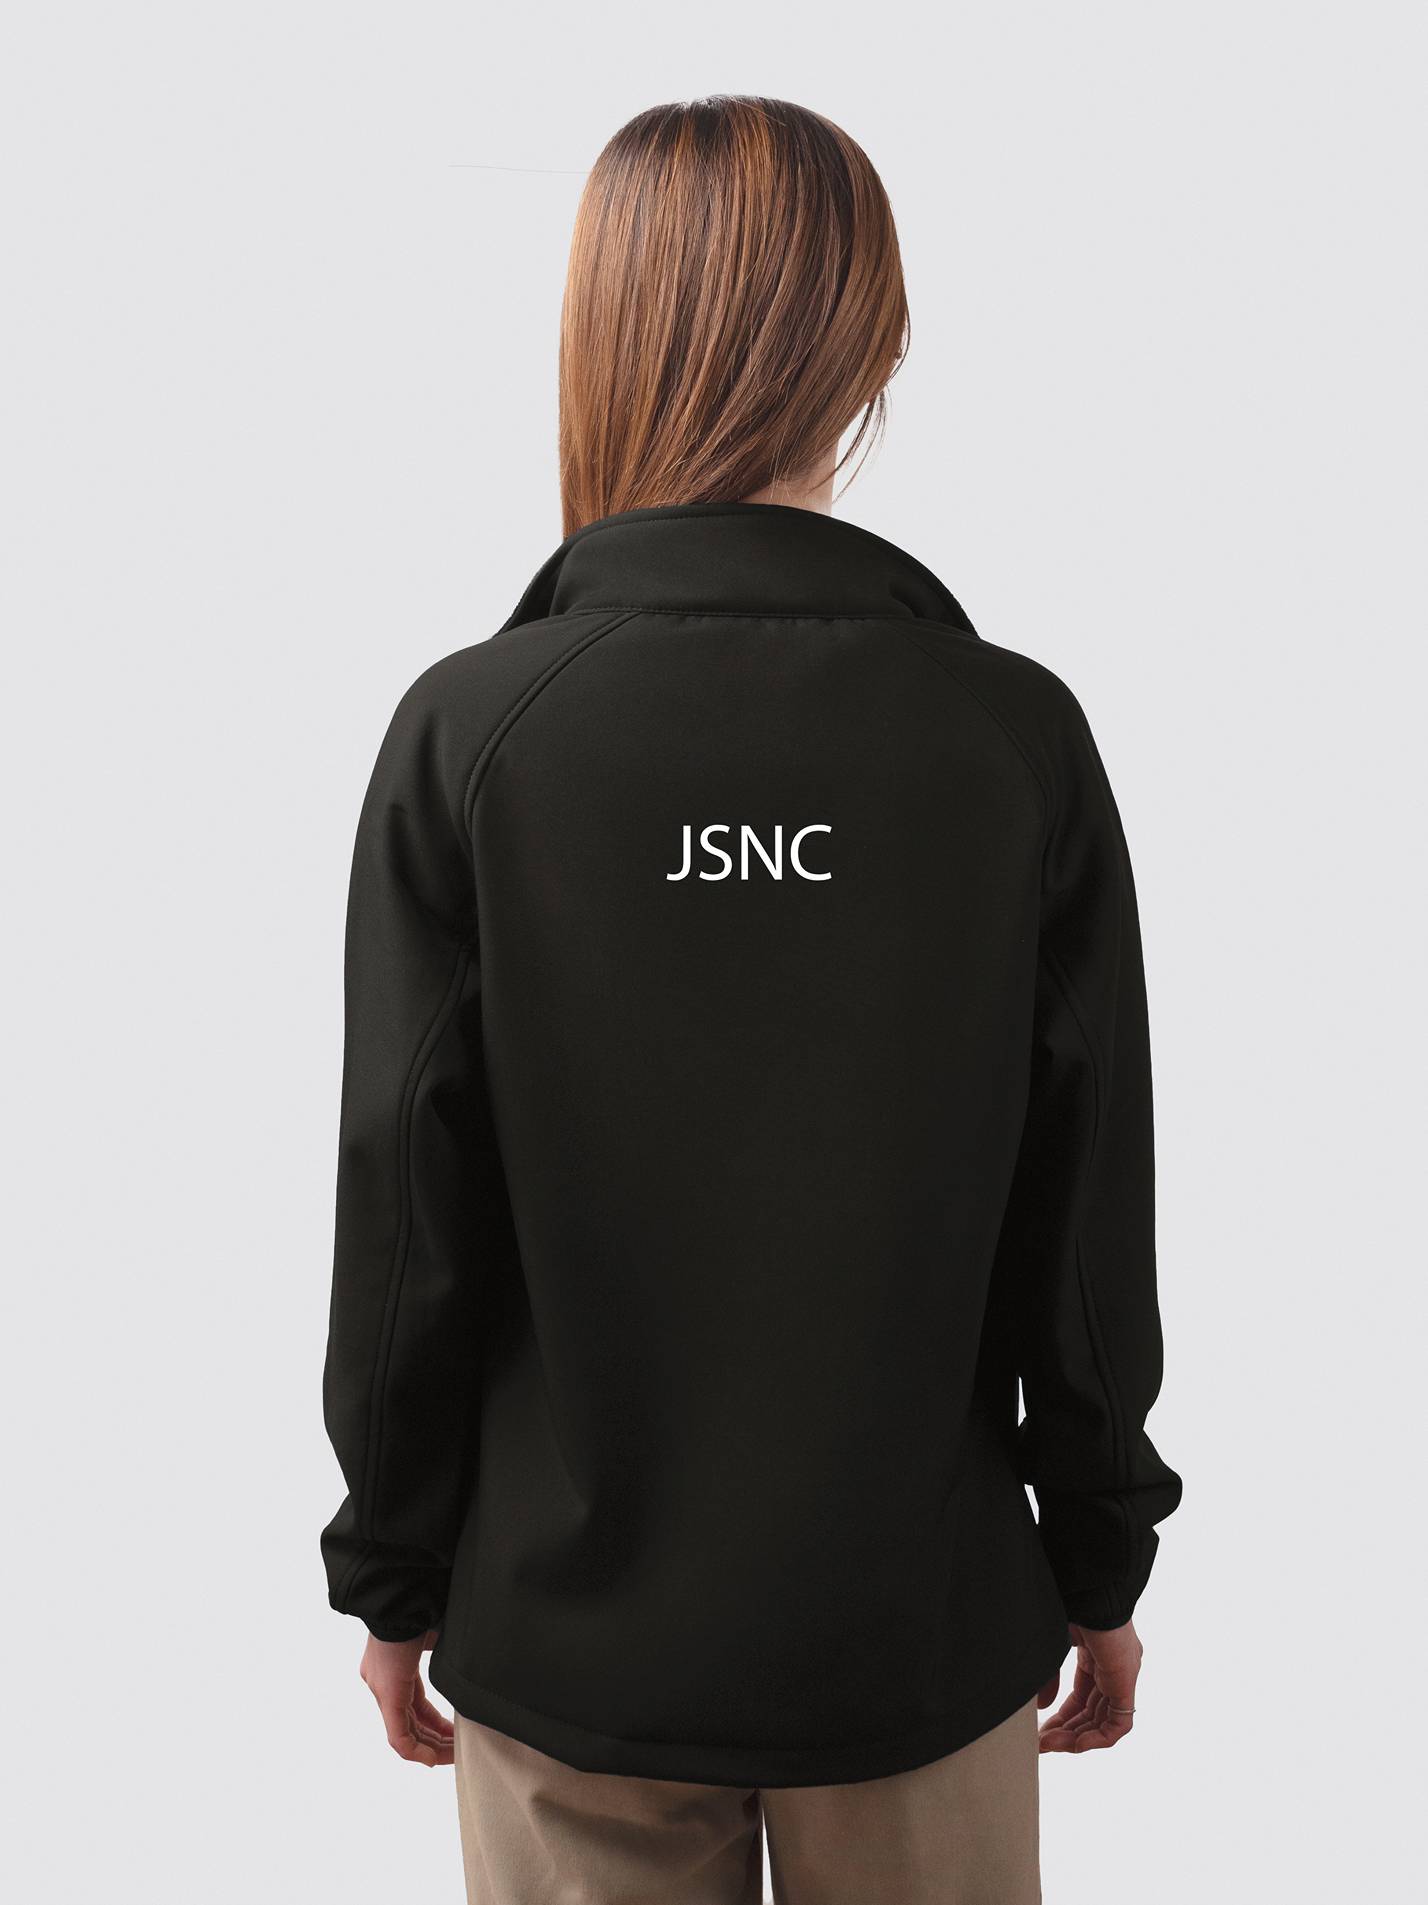 John Snow Netball Club Sustainable Ladies Soft Shell Jacket